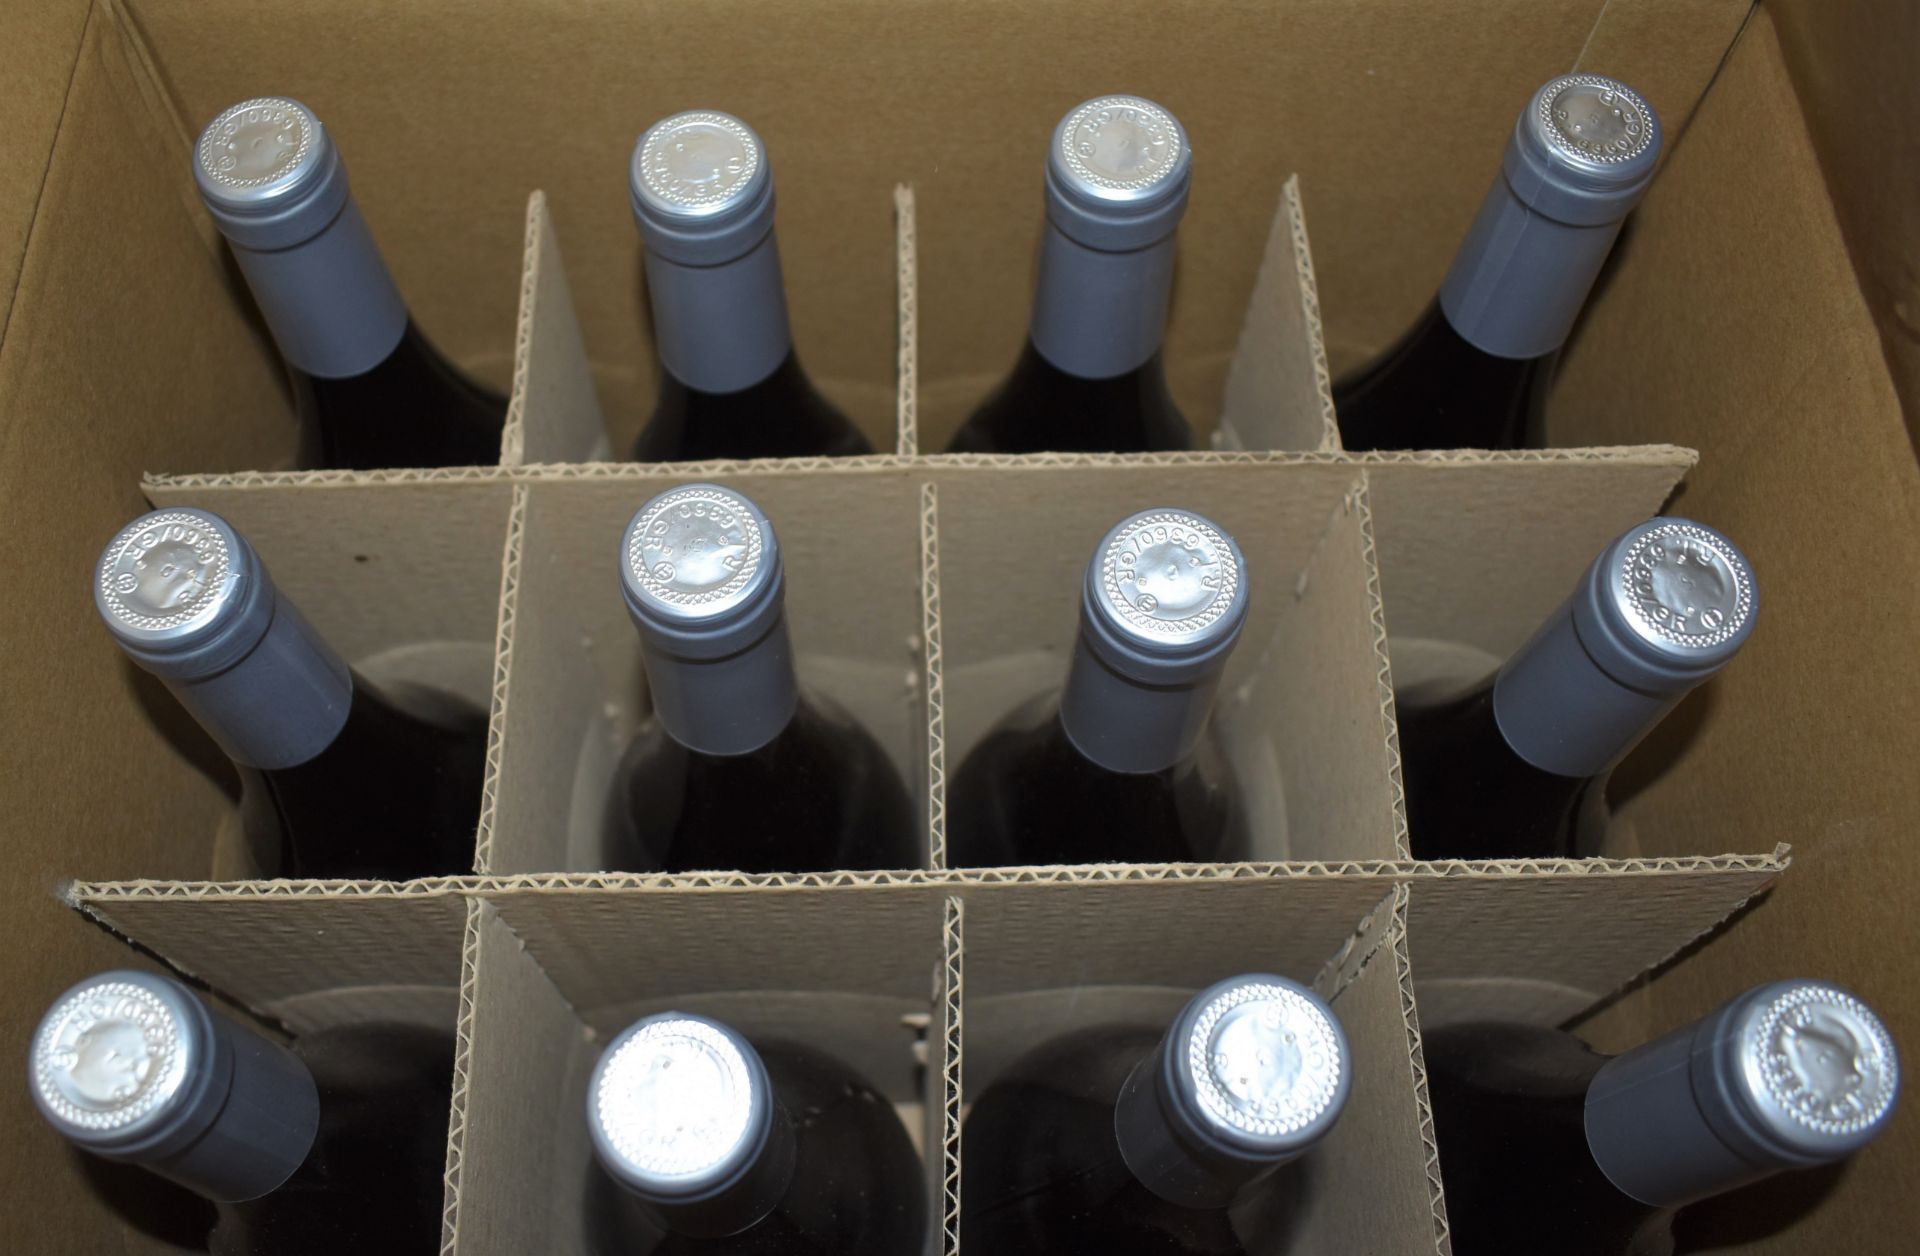 12 x Bottles of Stefano Di Blasi 2019 Vermentino Toscana 13.5% Wine - 750ml Bottles - Drink Until - Image 3 of 8